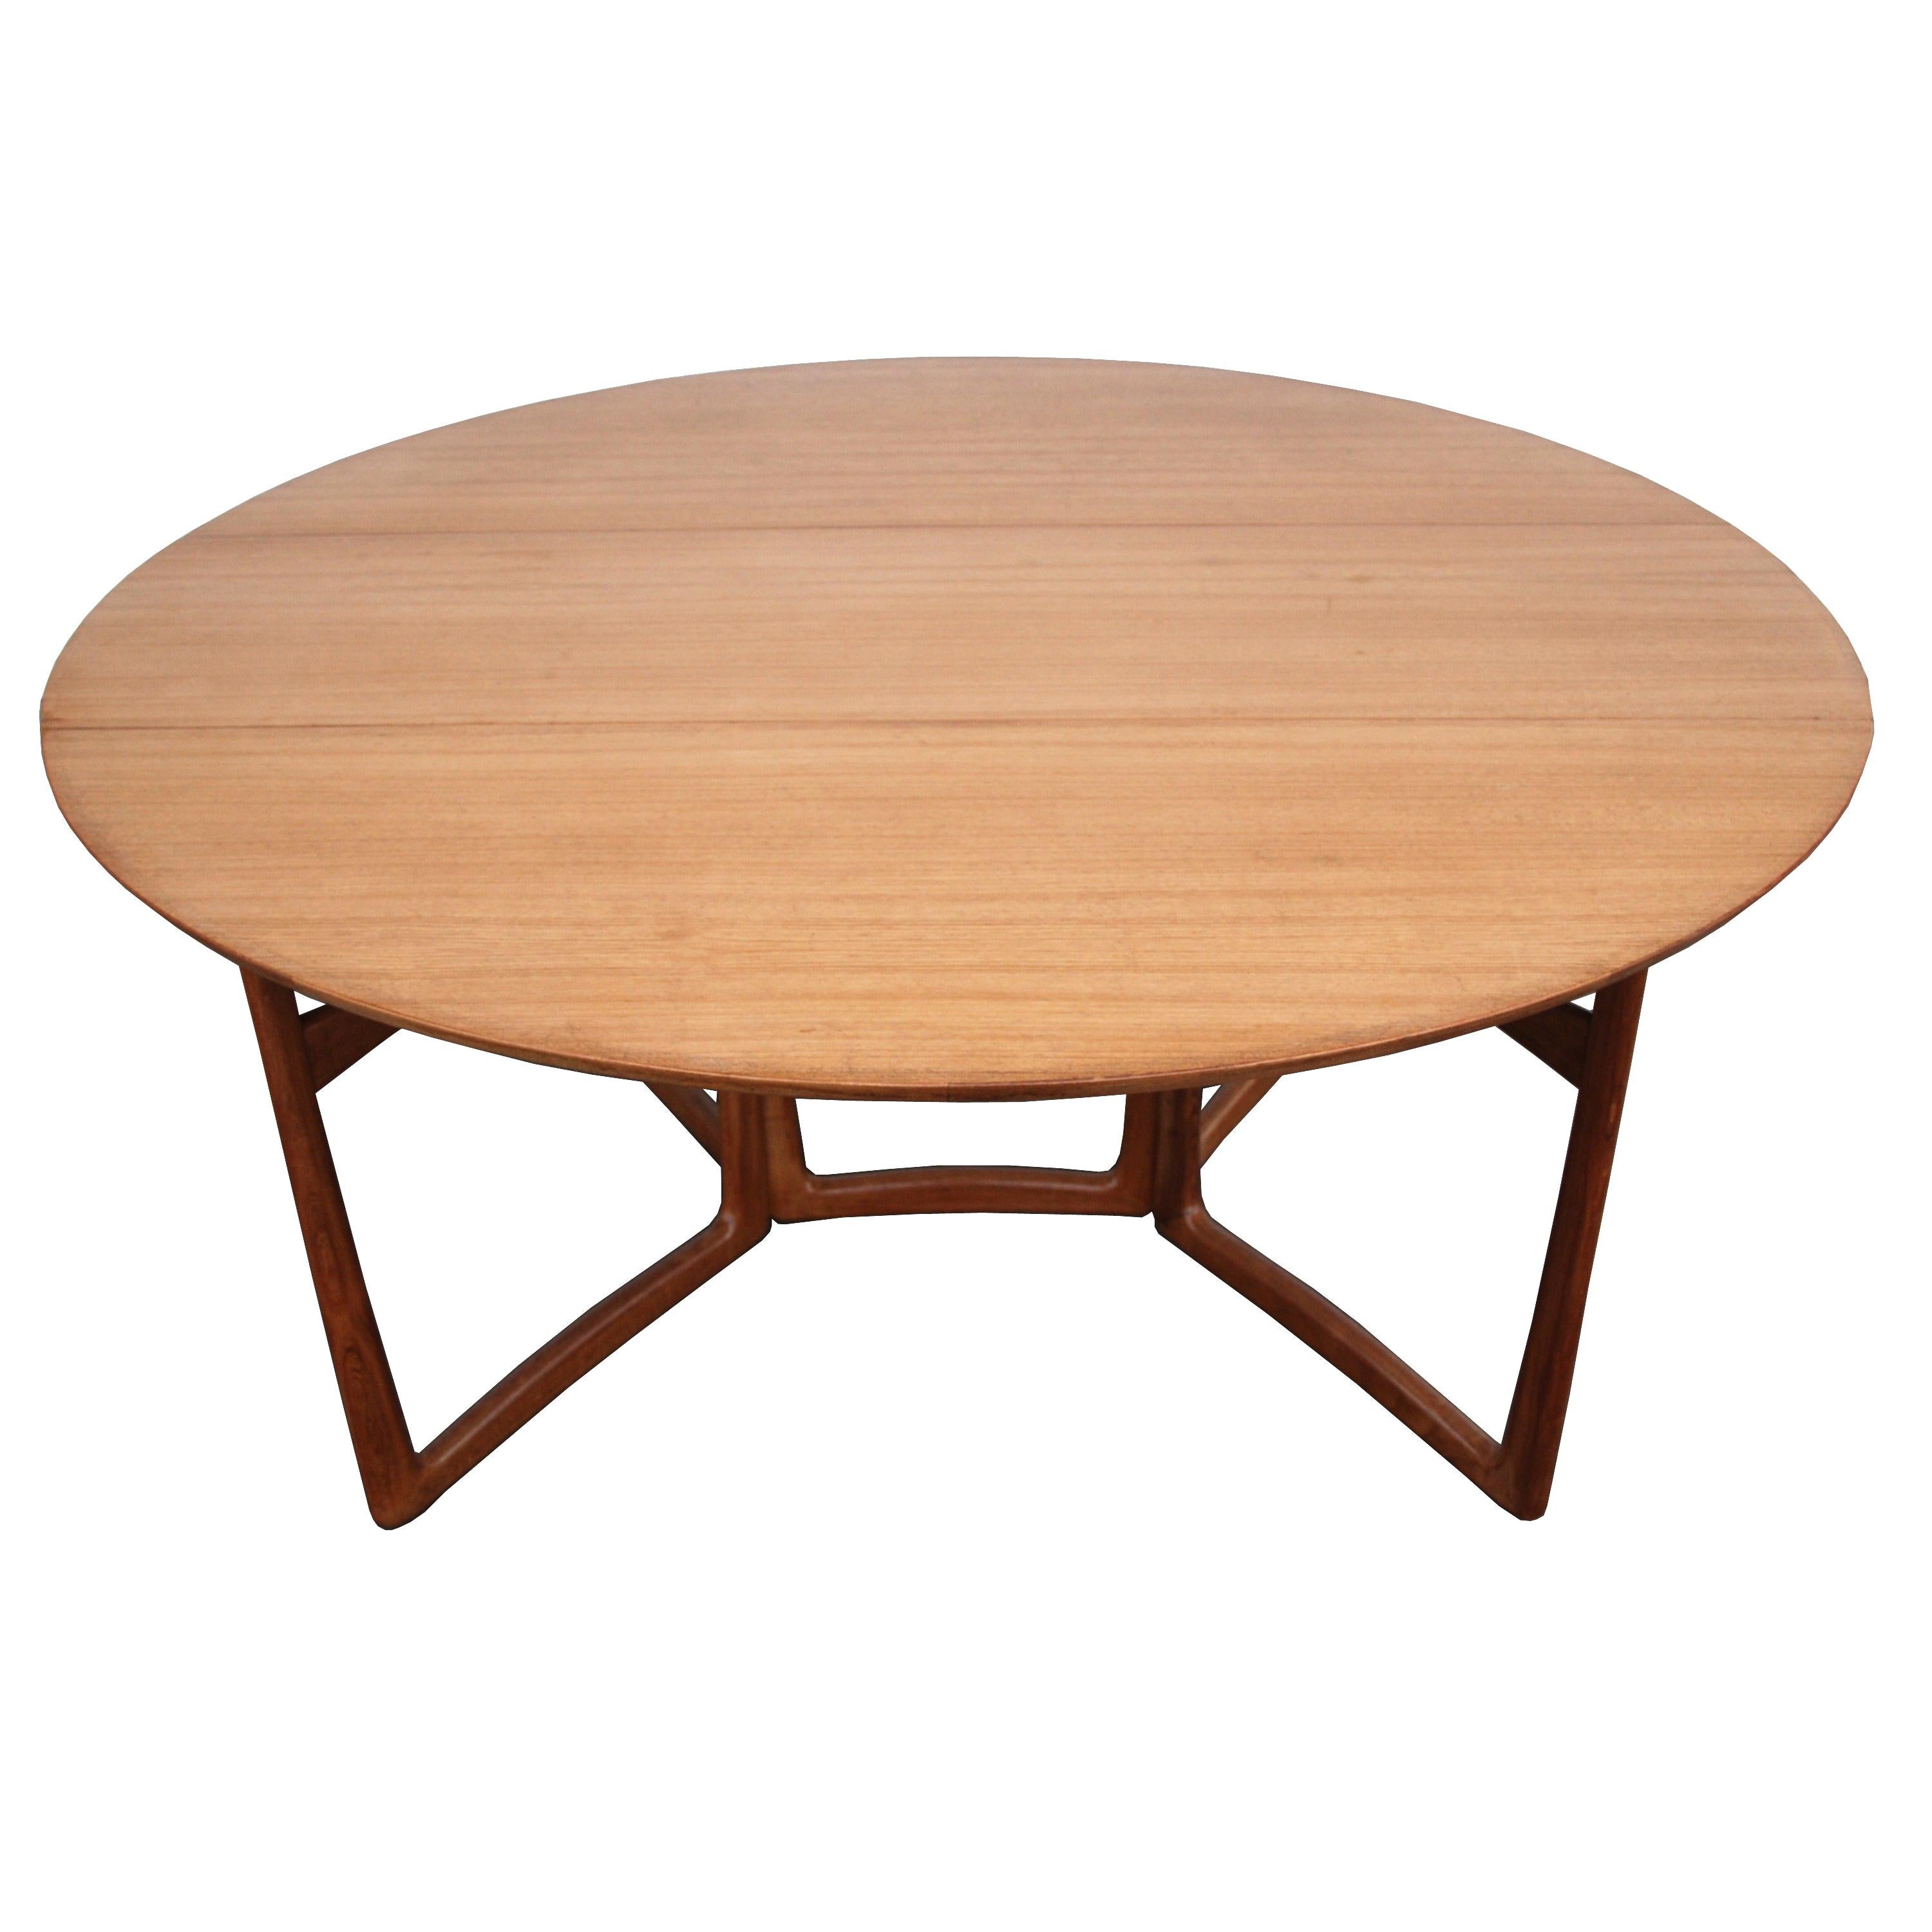 1960s Danish Peter Hvidt Drop-Leaf Dining Table in Teak and Brass For Sale